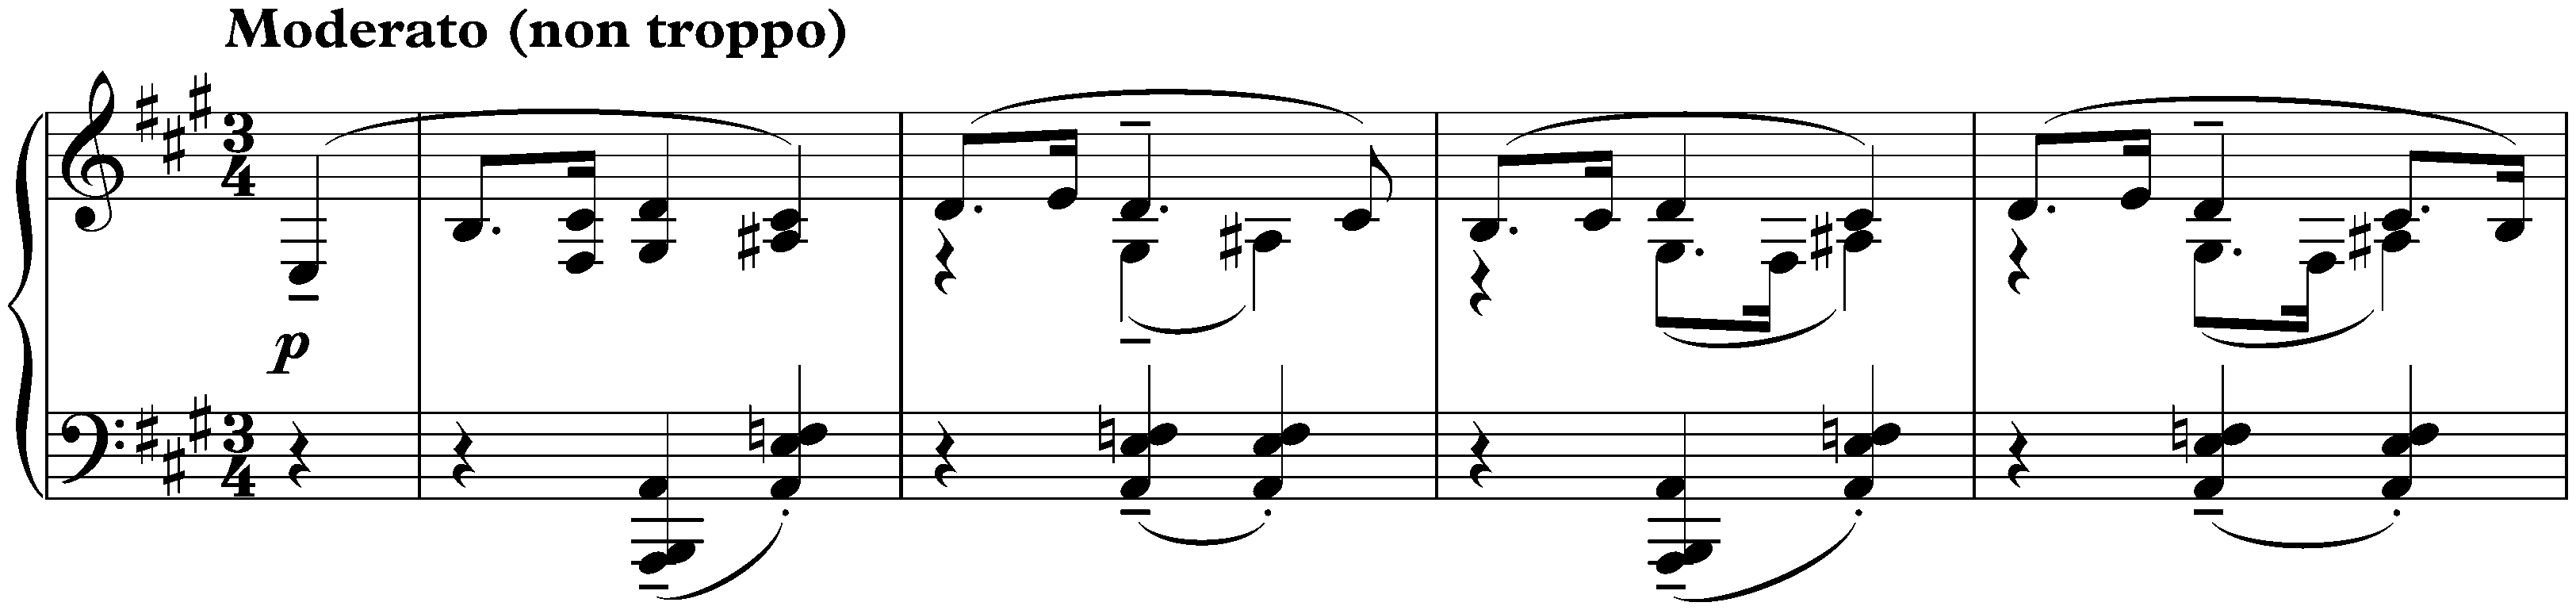 Twenty Mazurkas, op. 50; 8. Moderato (non troppo)